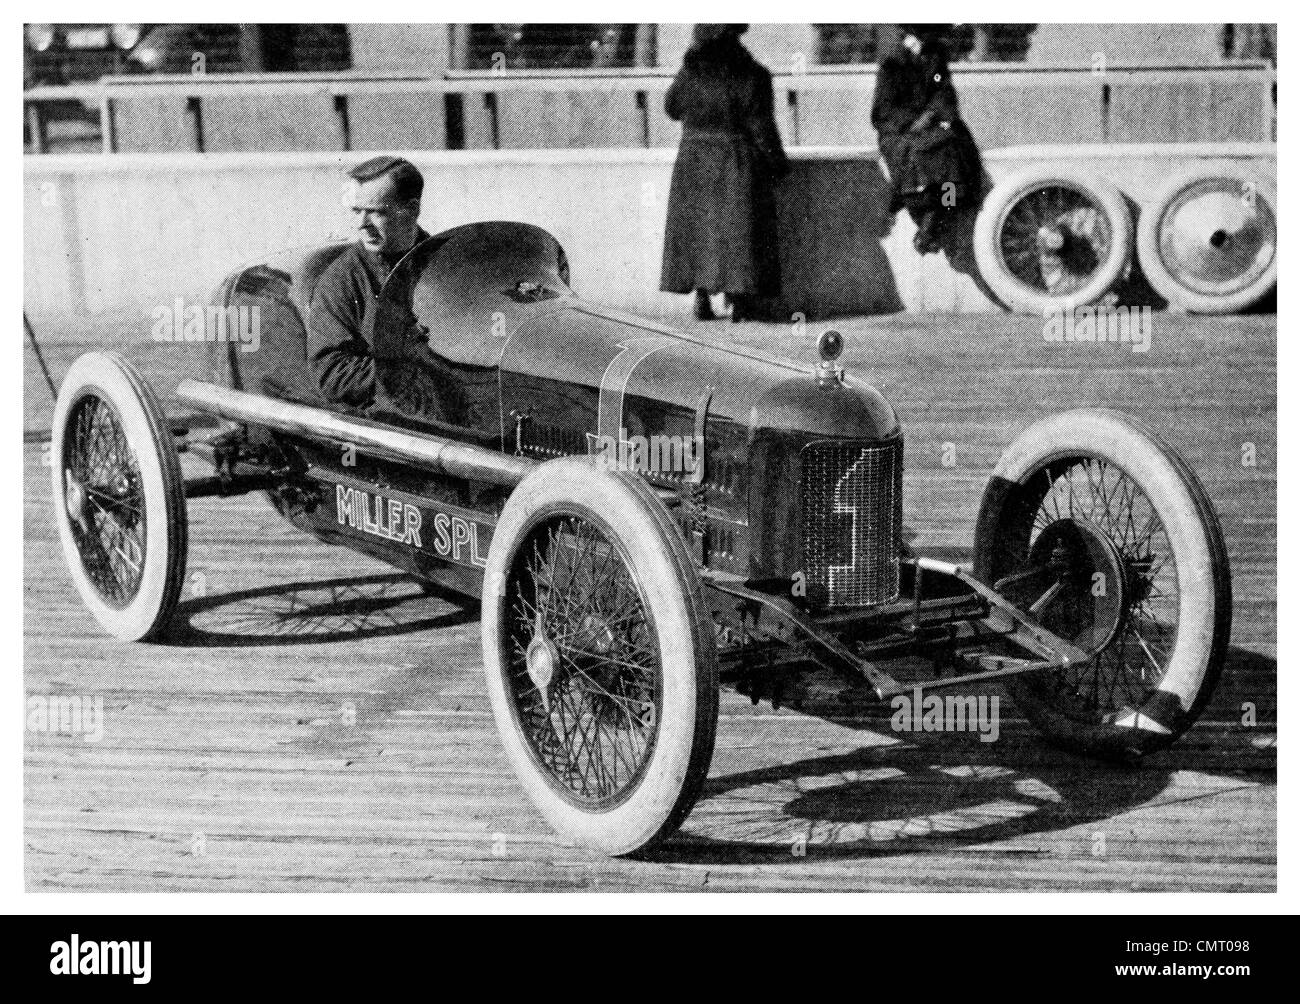 1923 Power machine racing car Miller SPL Stock Photo